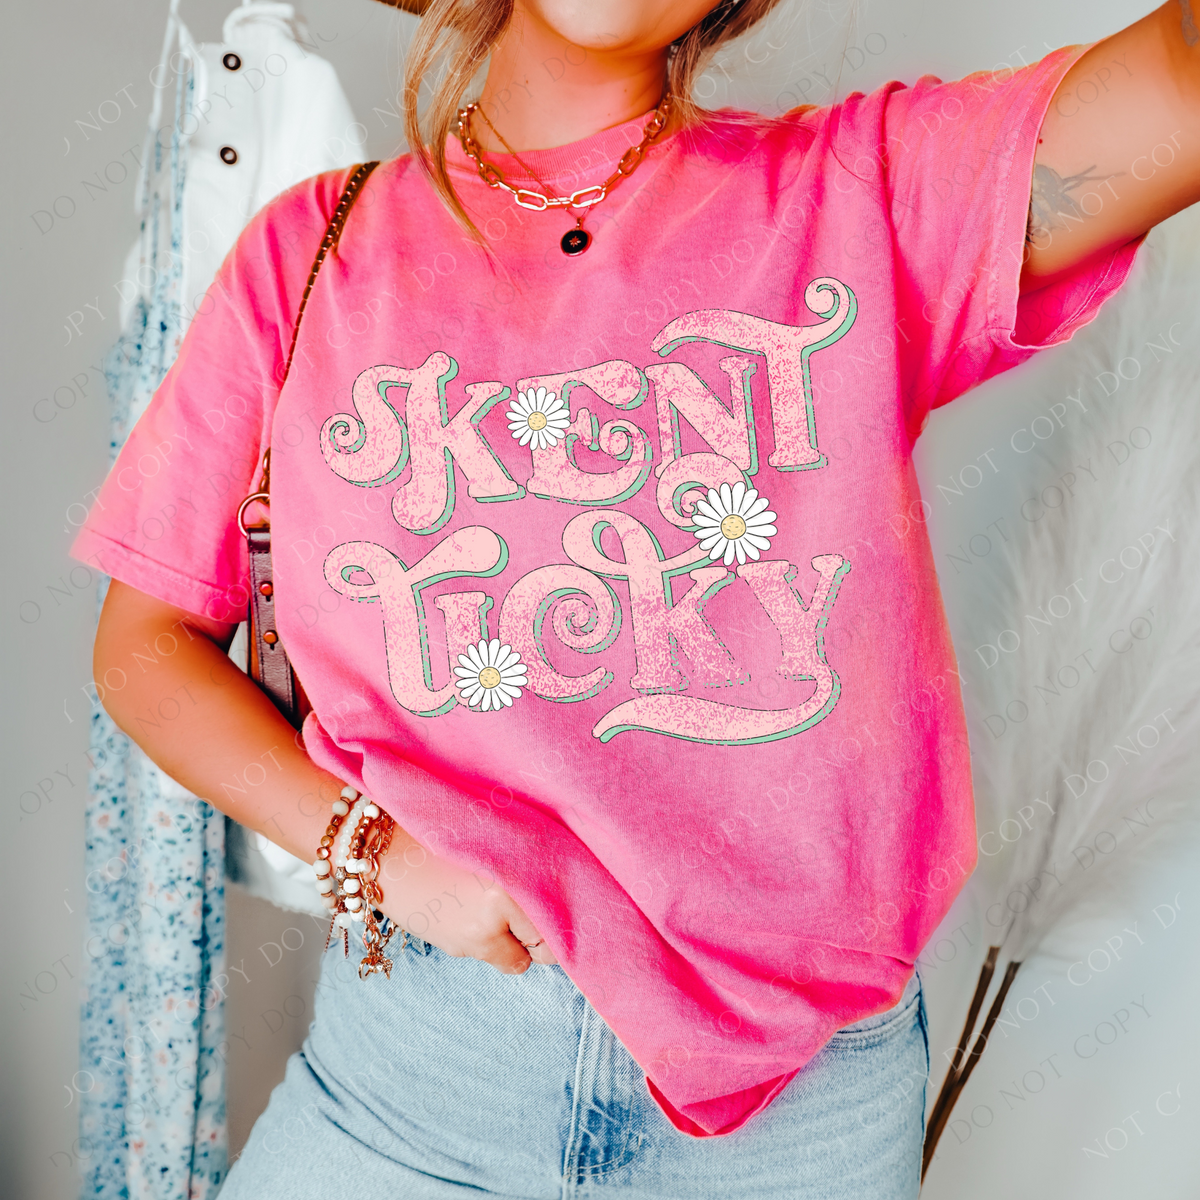 Kentucky Retro Swirl Daisies Distressed Pink & Green Spring & Summer Digital Design, PNG